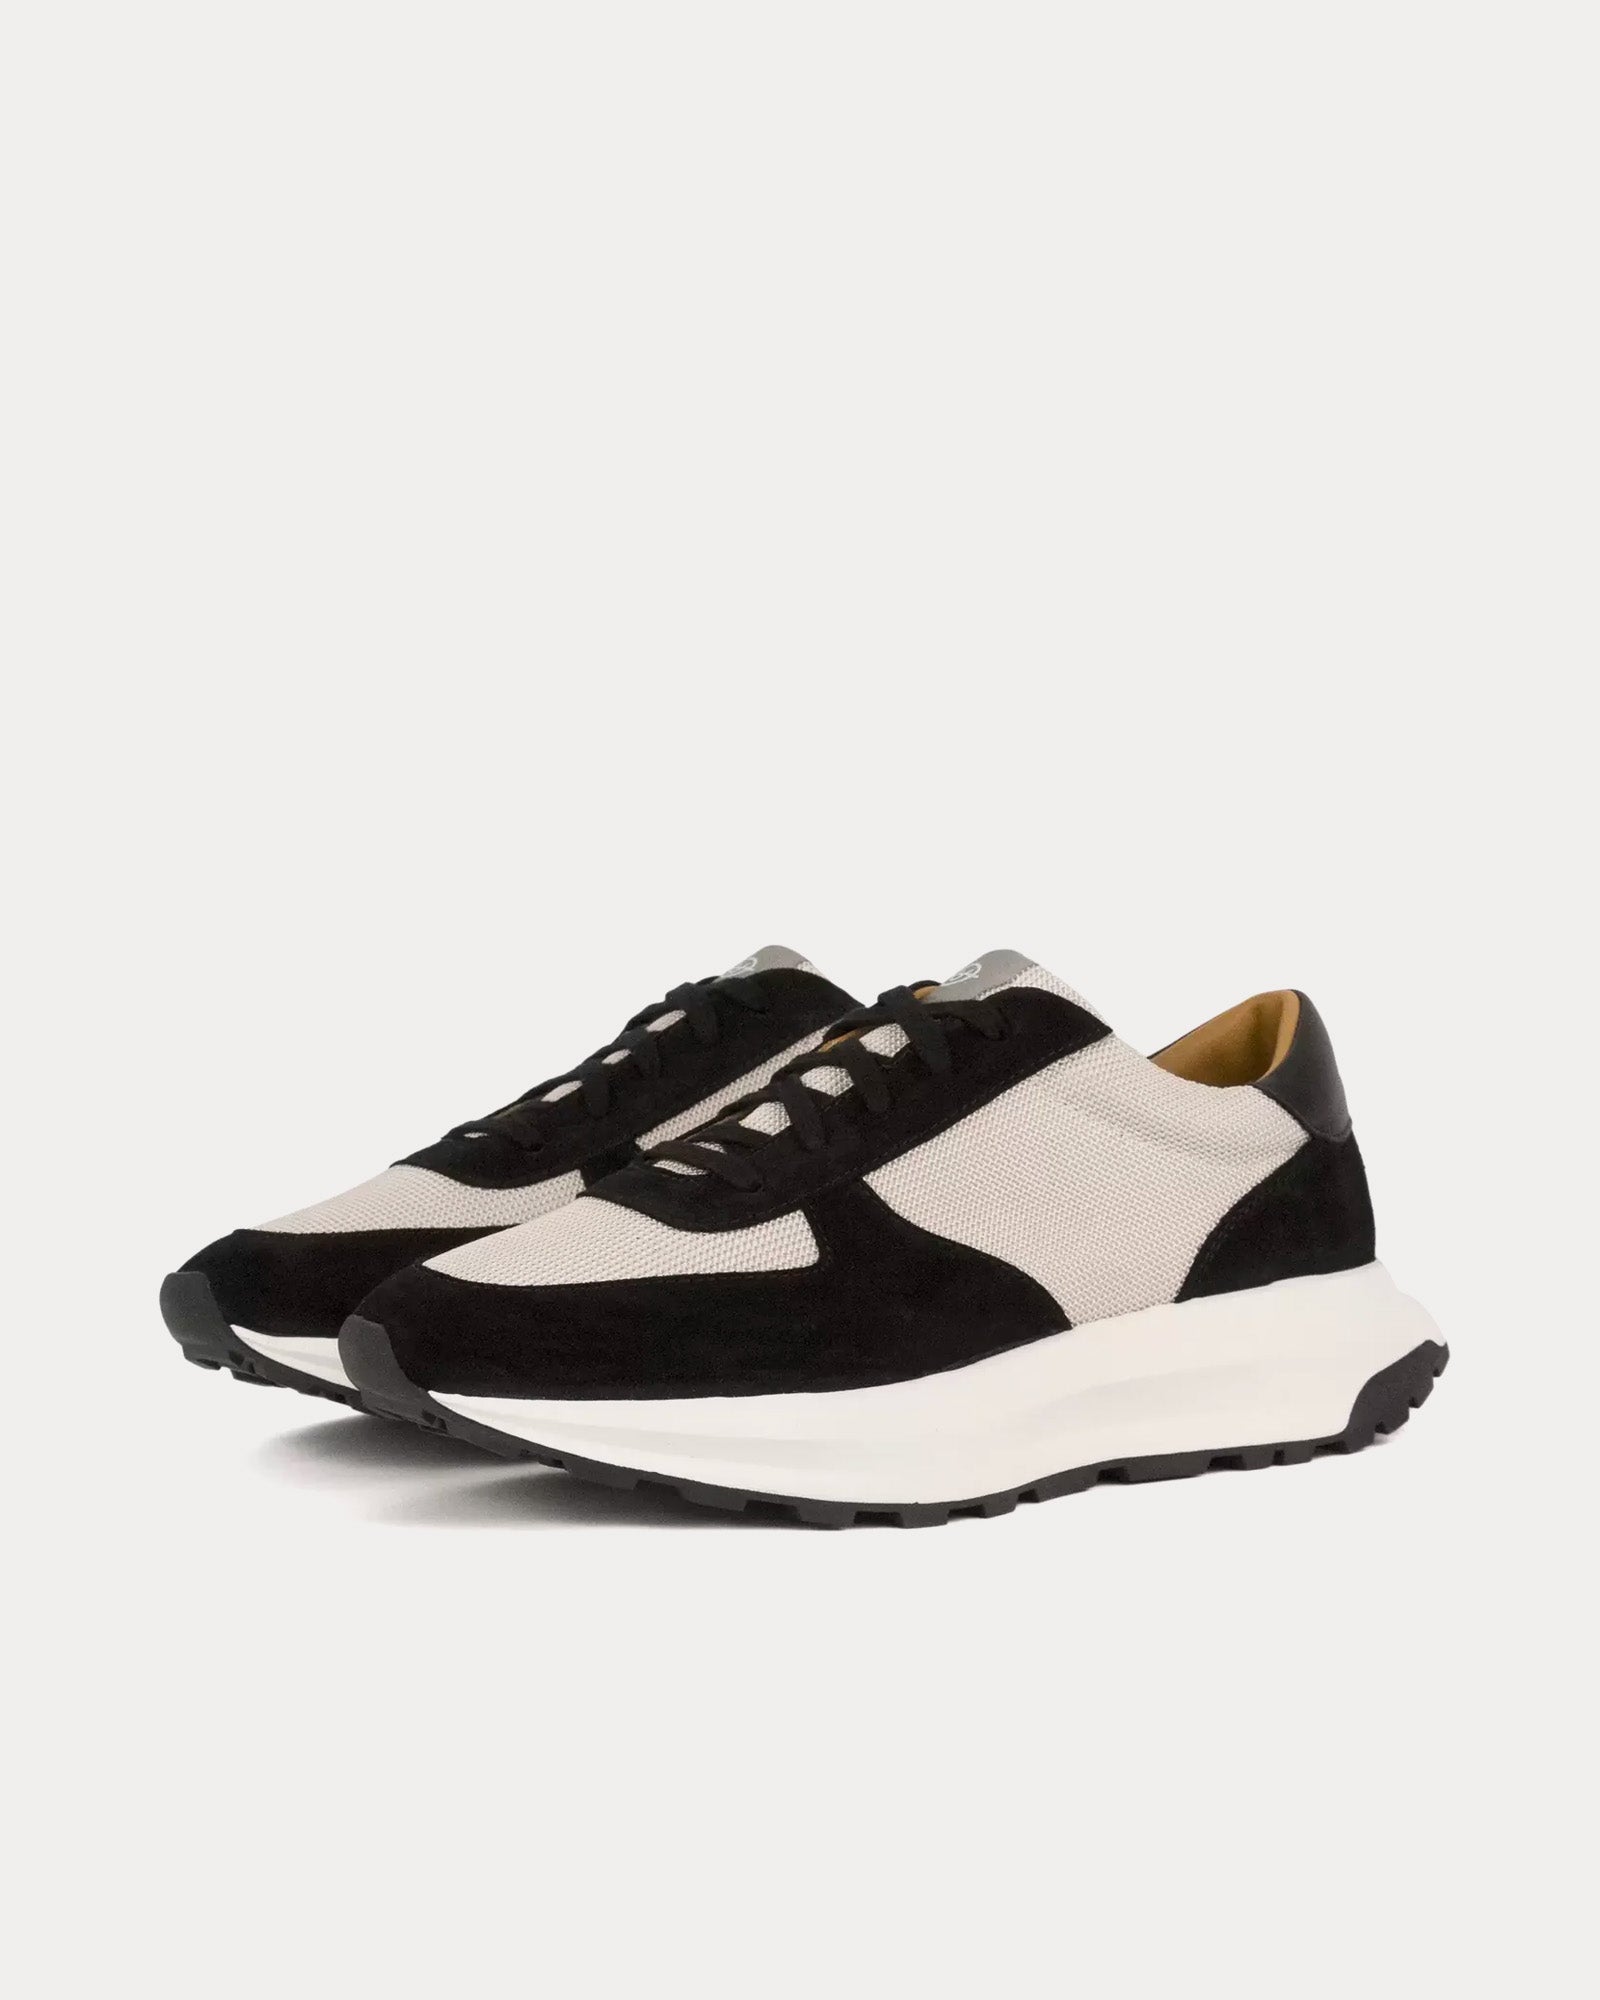 Unseen Footwear - Trinity Luxe Suede Black / White Low Top Sneakers